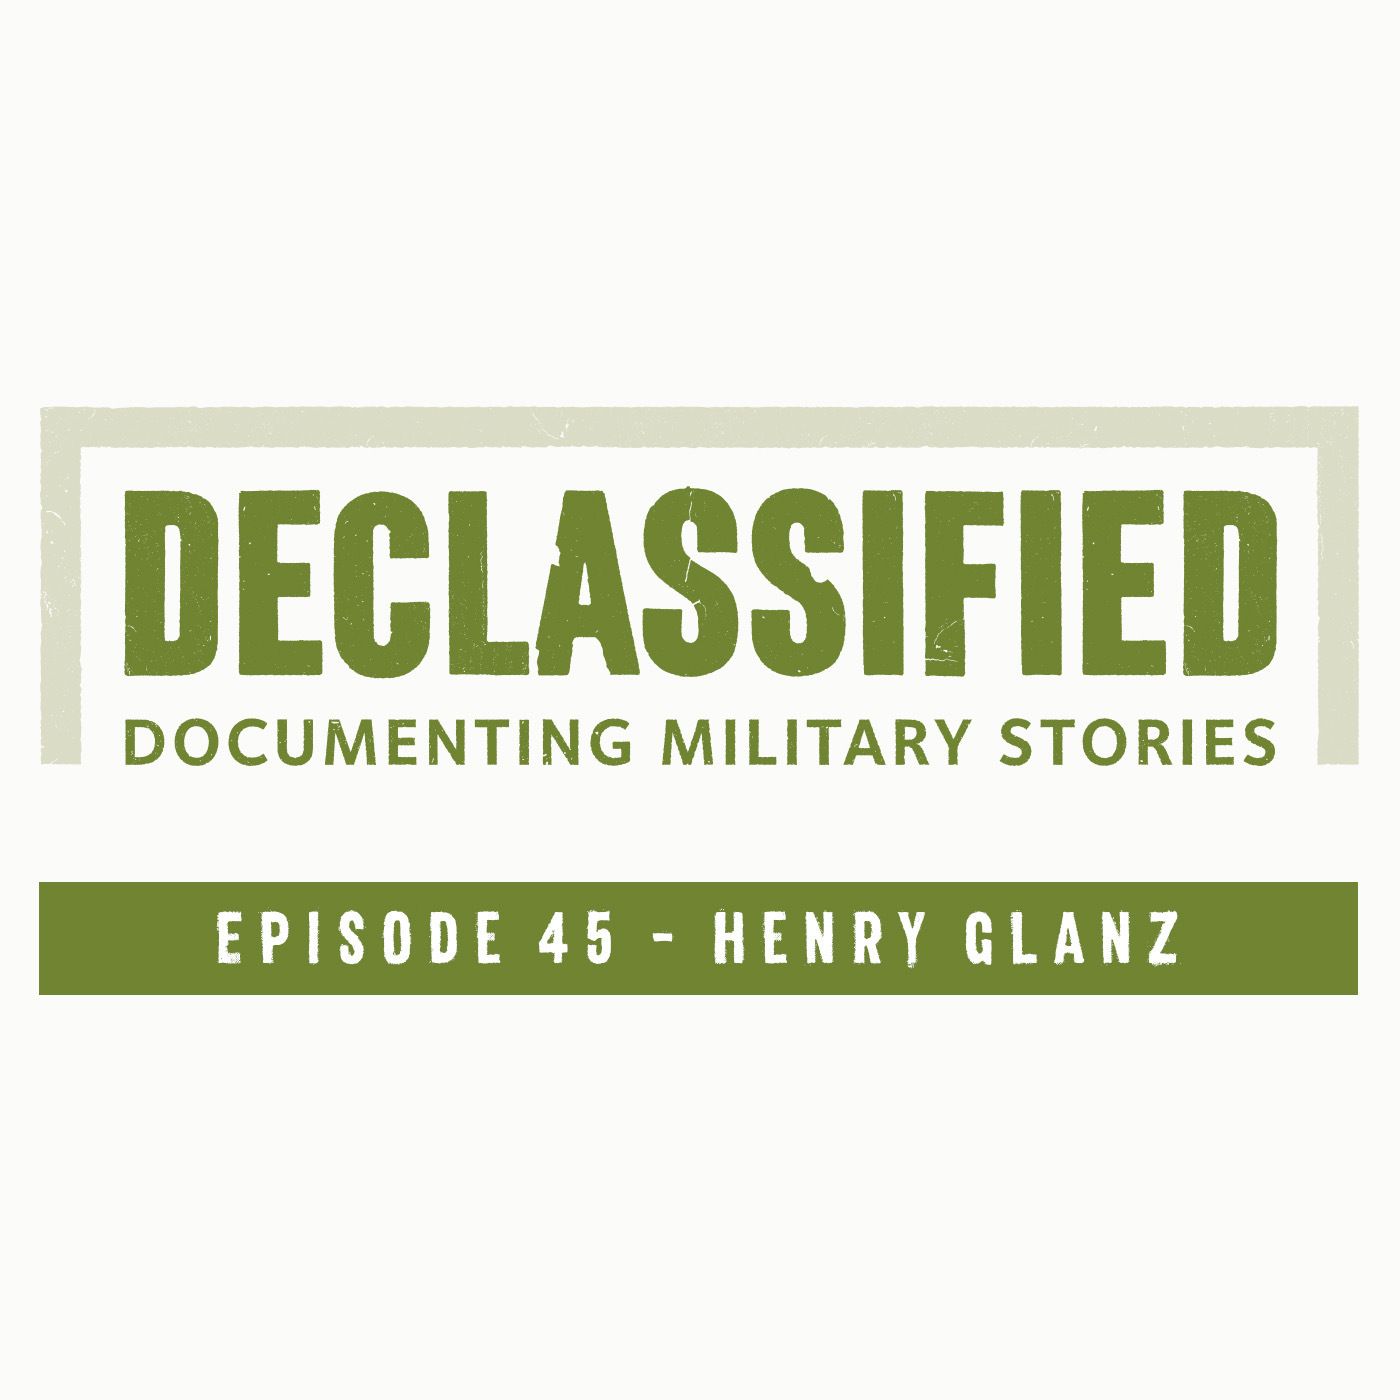 Episode 45 - Henry Glanz